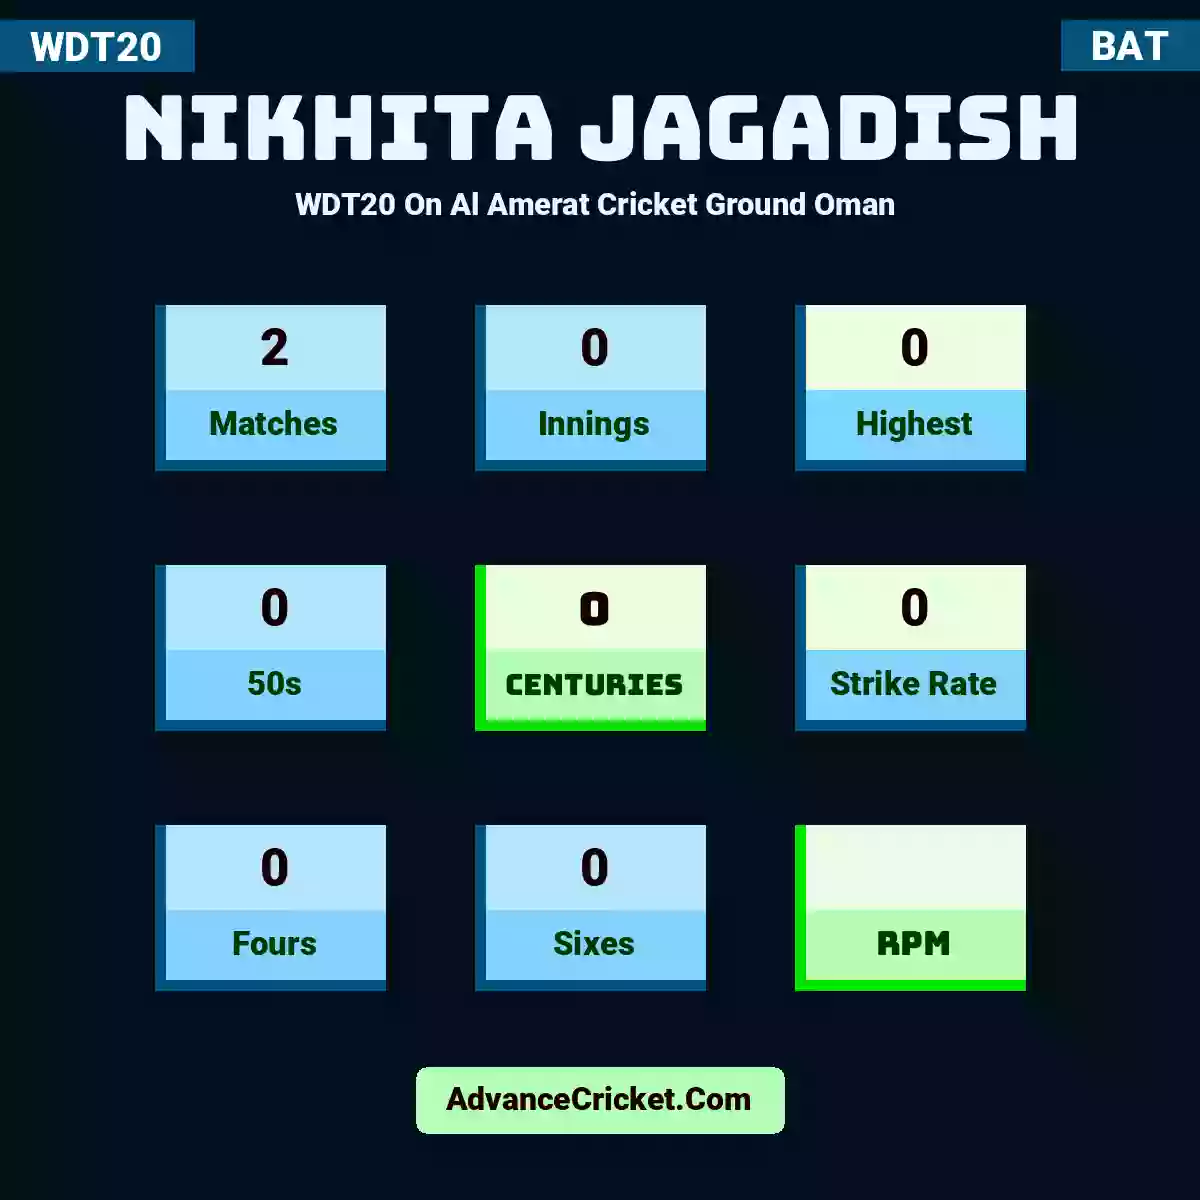 Nikhita Jagadish WDT20  On Al Amerat Cricket Ground Oman , Nikhita Jagadish played 1 matches, scored 0 runs as highest, 0 half-centuries, and 0 centuries, with a strike rate of 0. N.Jagadish hit 0 fours and 0 sixes.